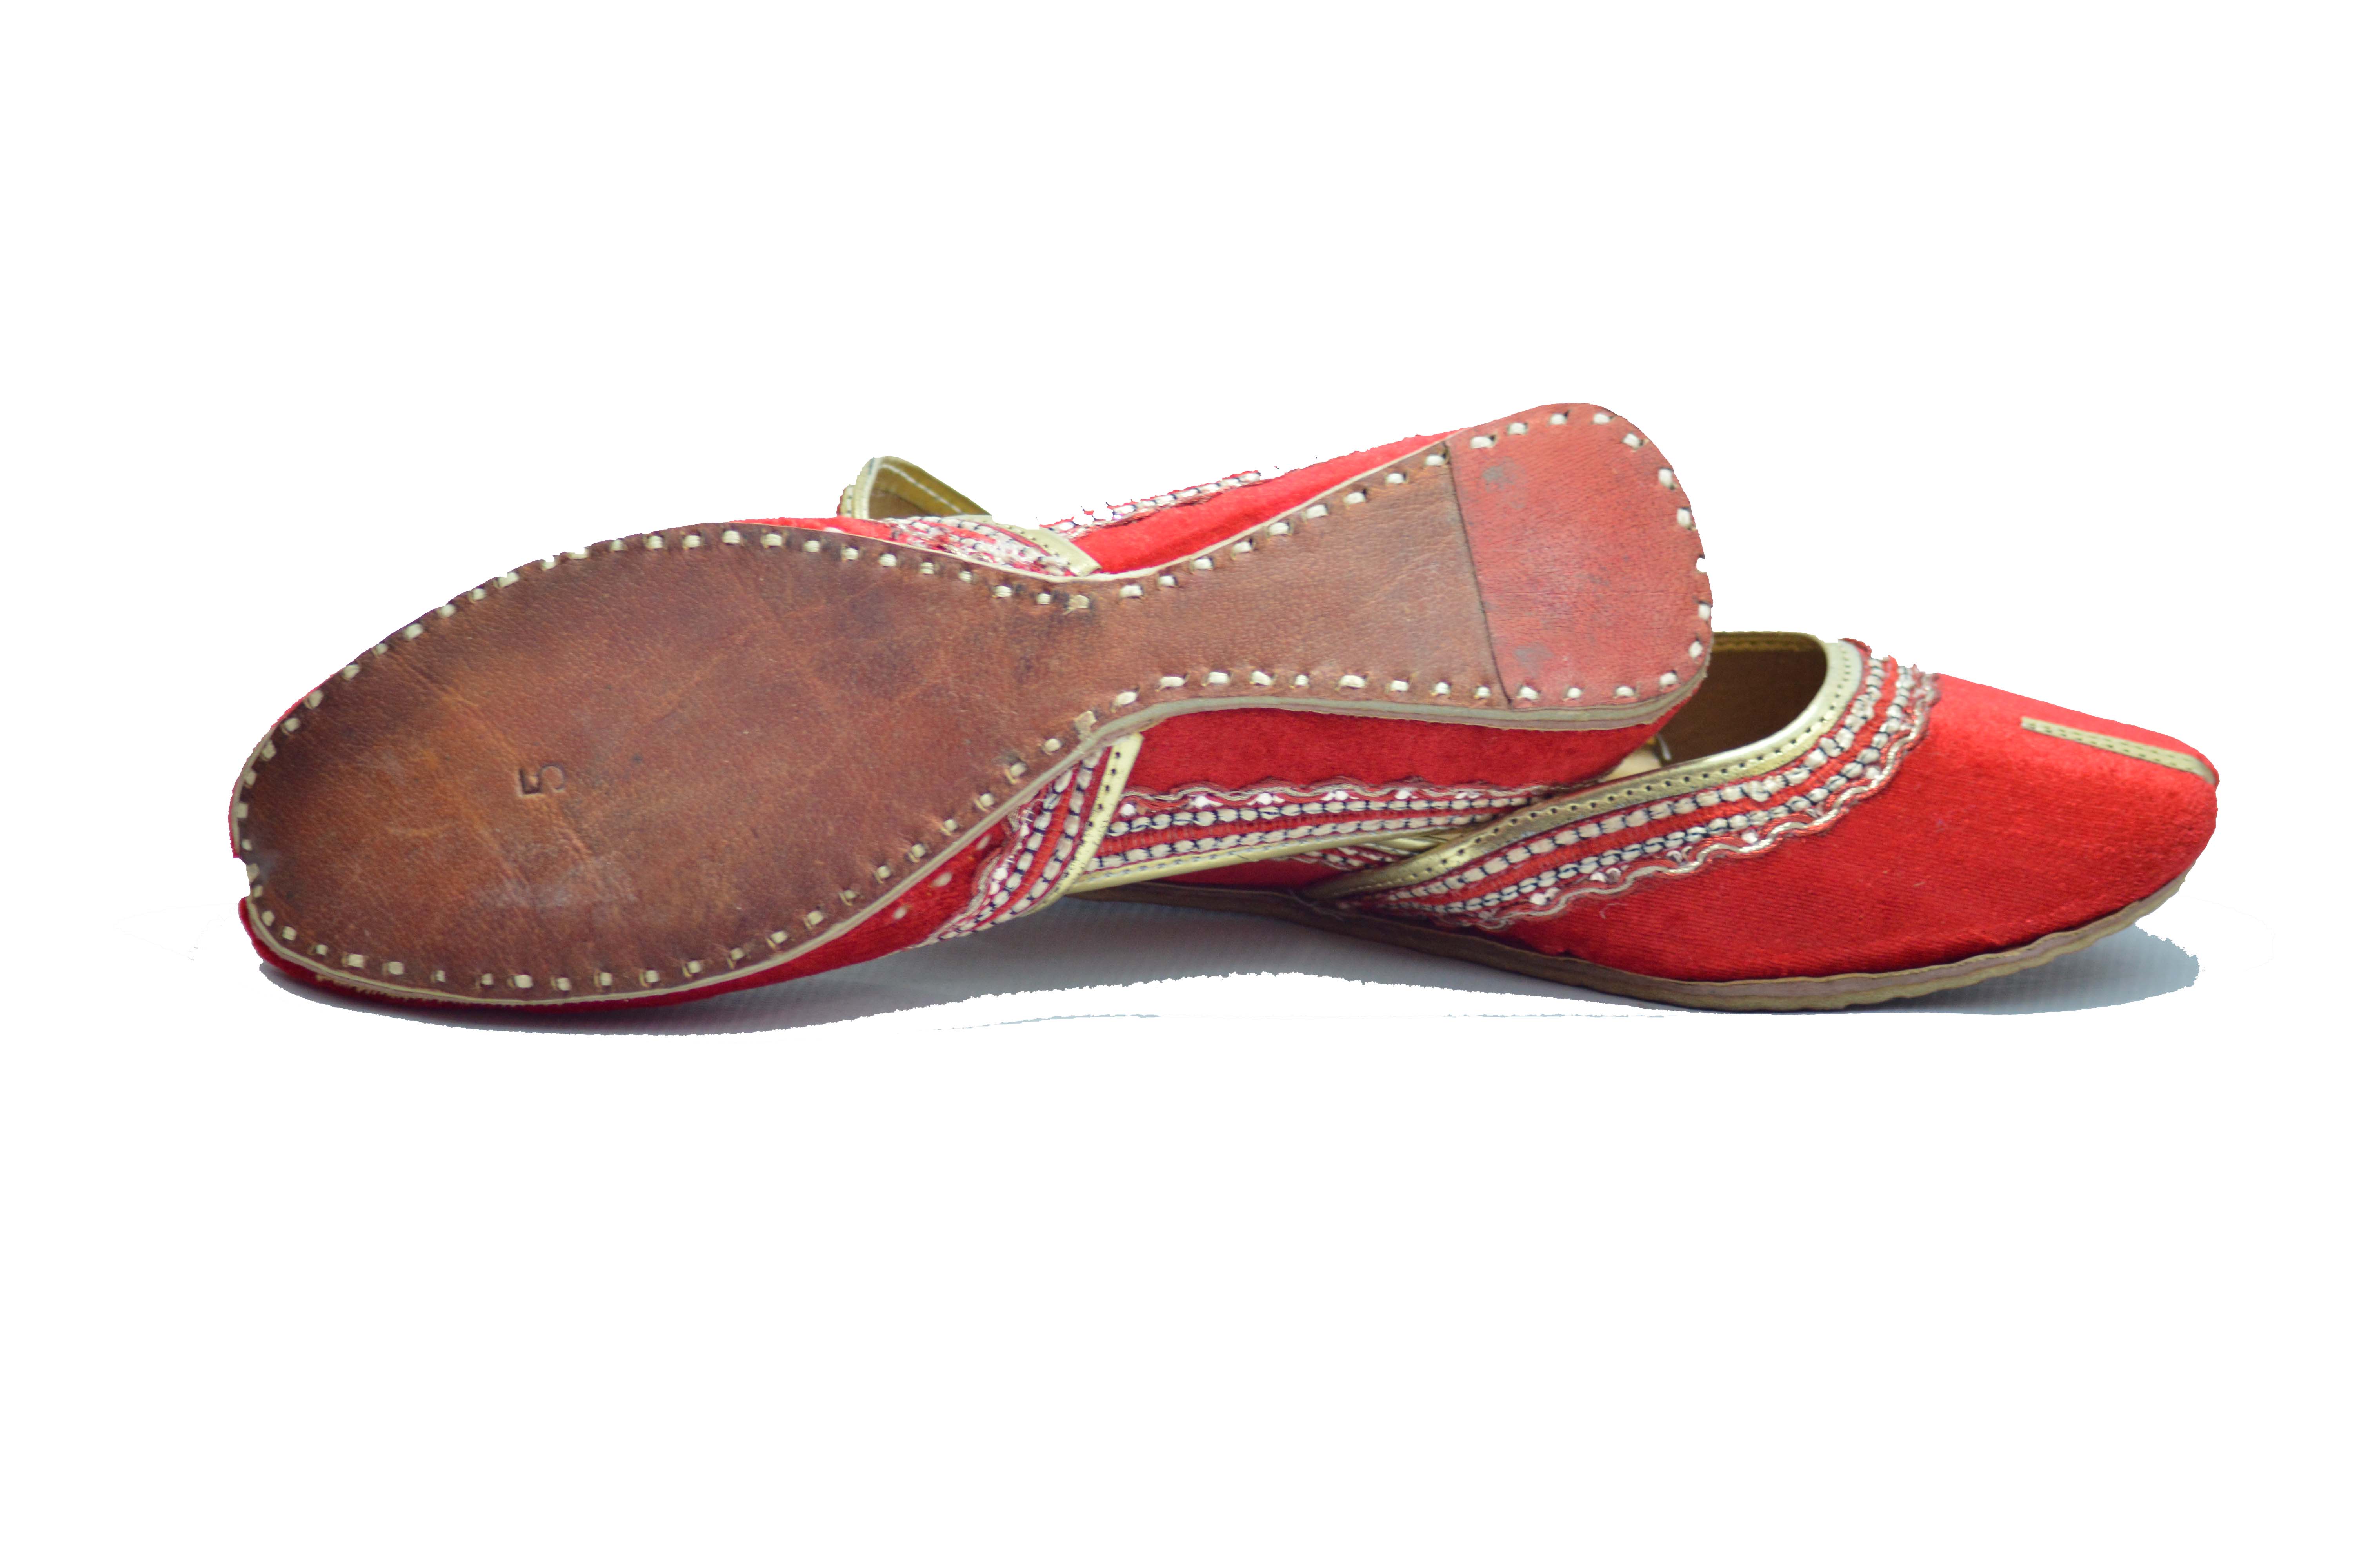 Buy Patiala Shahi punjabi jutti red in colour Online @ ₹499 from ShopClues